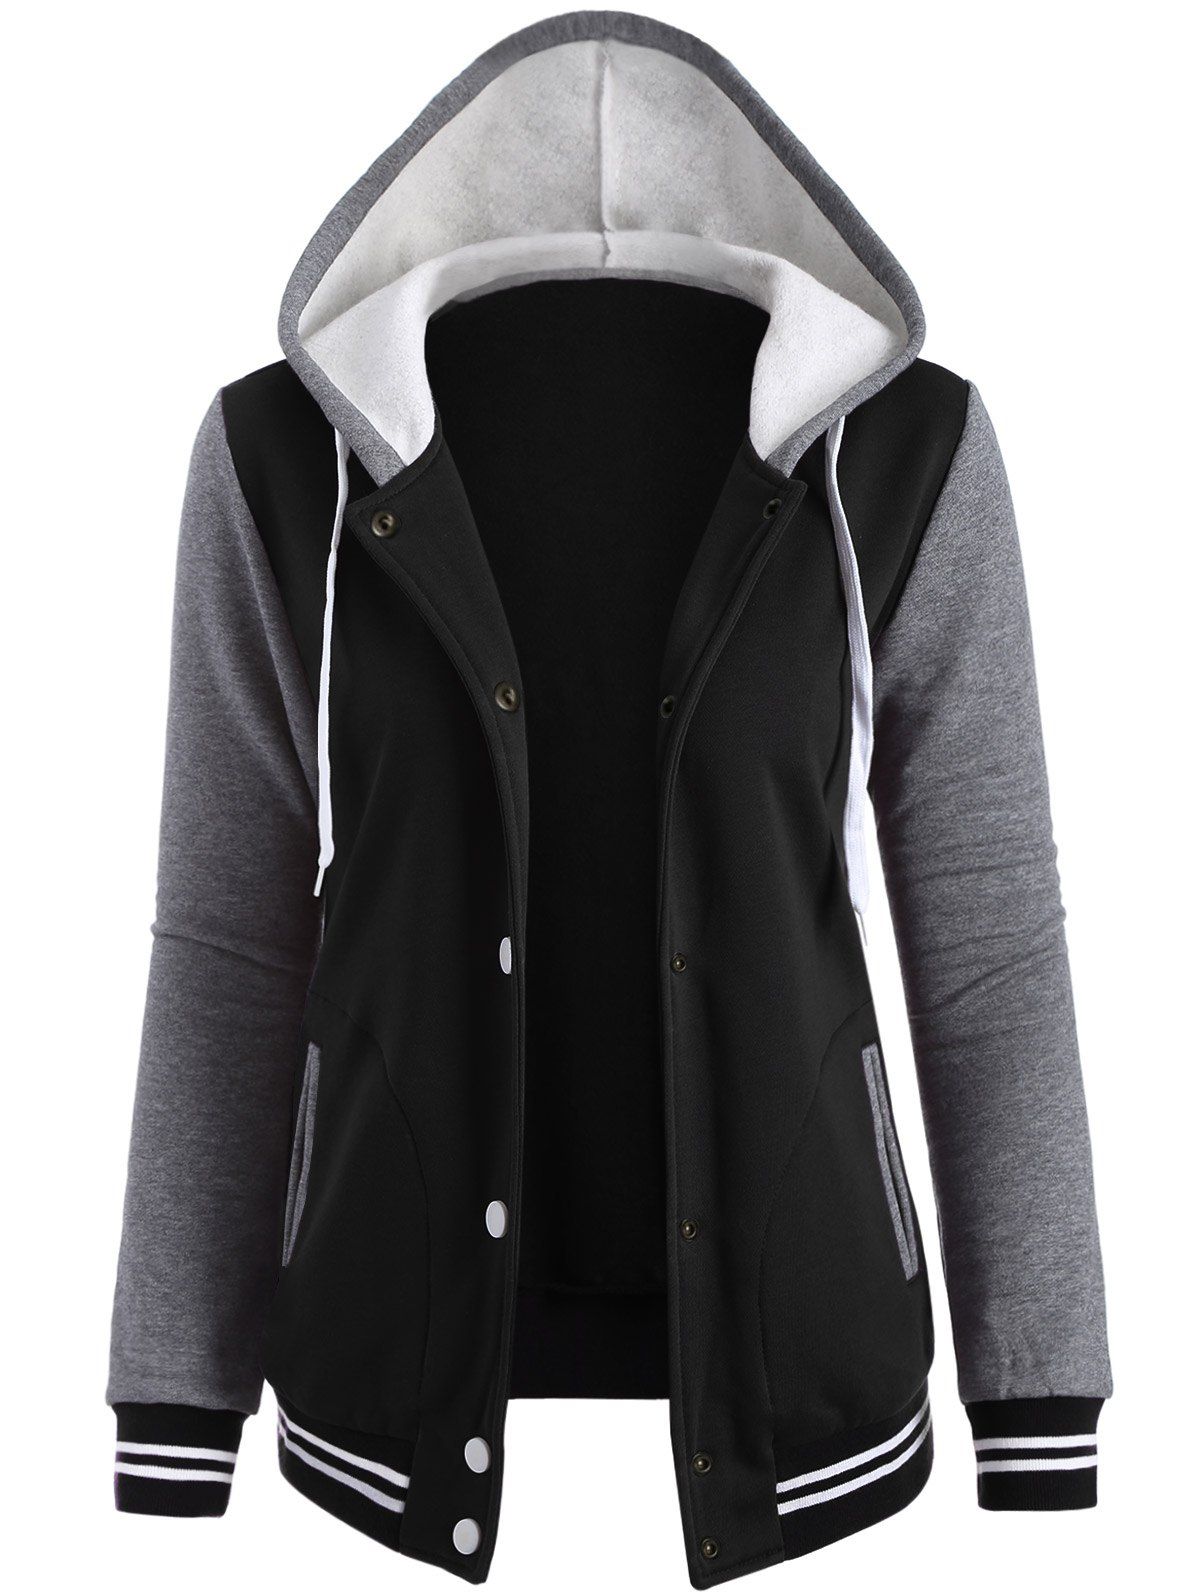 Contrast Sleeve Fleece Baseball Hoodie Jacket - BLACK XL